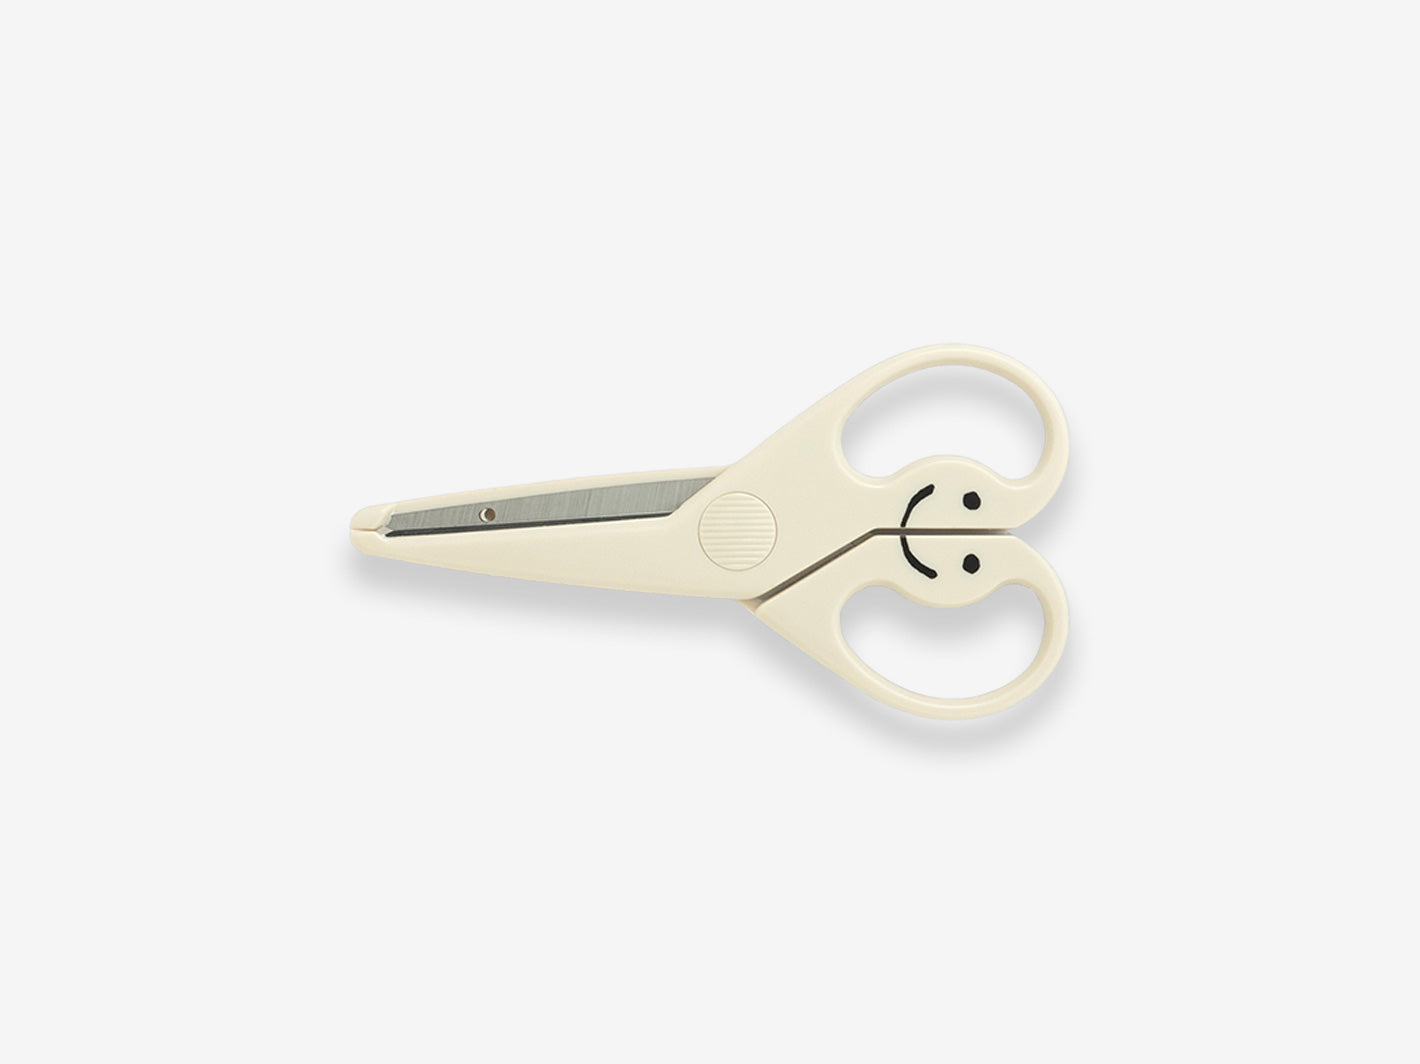 Breata's Gentle Scissors